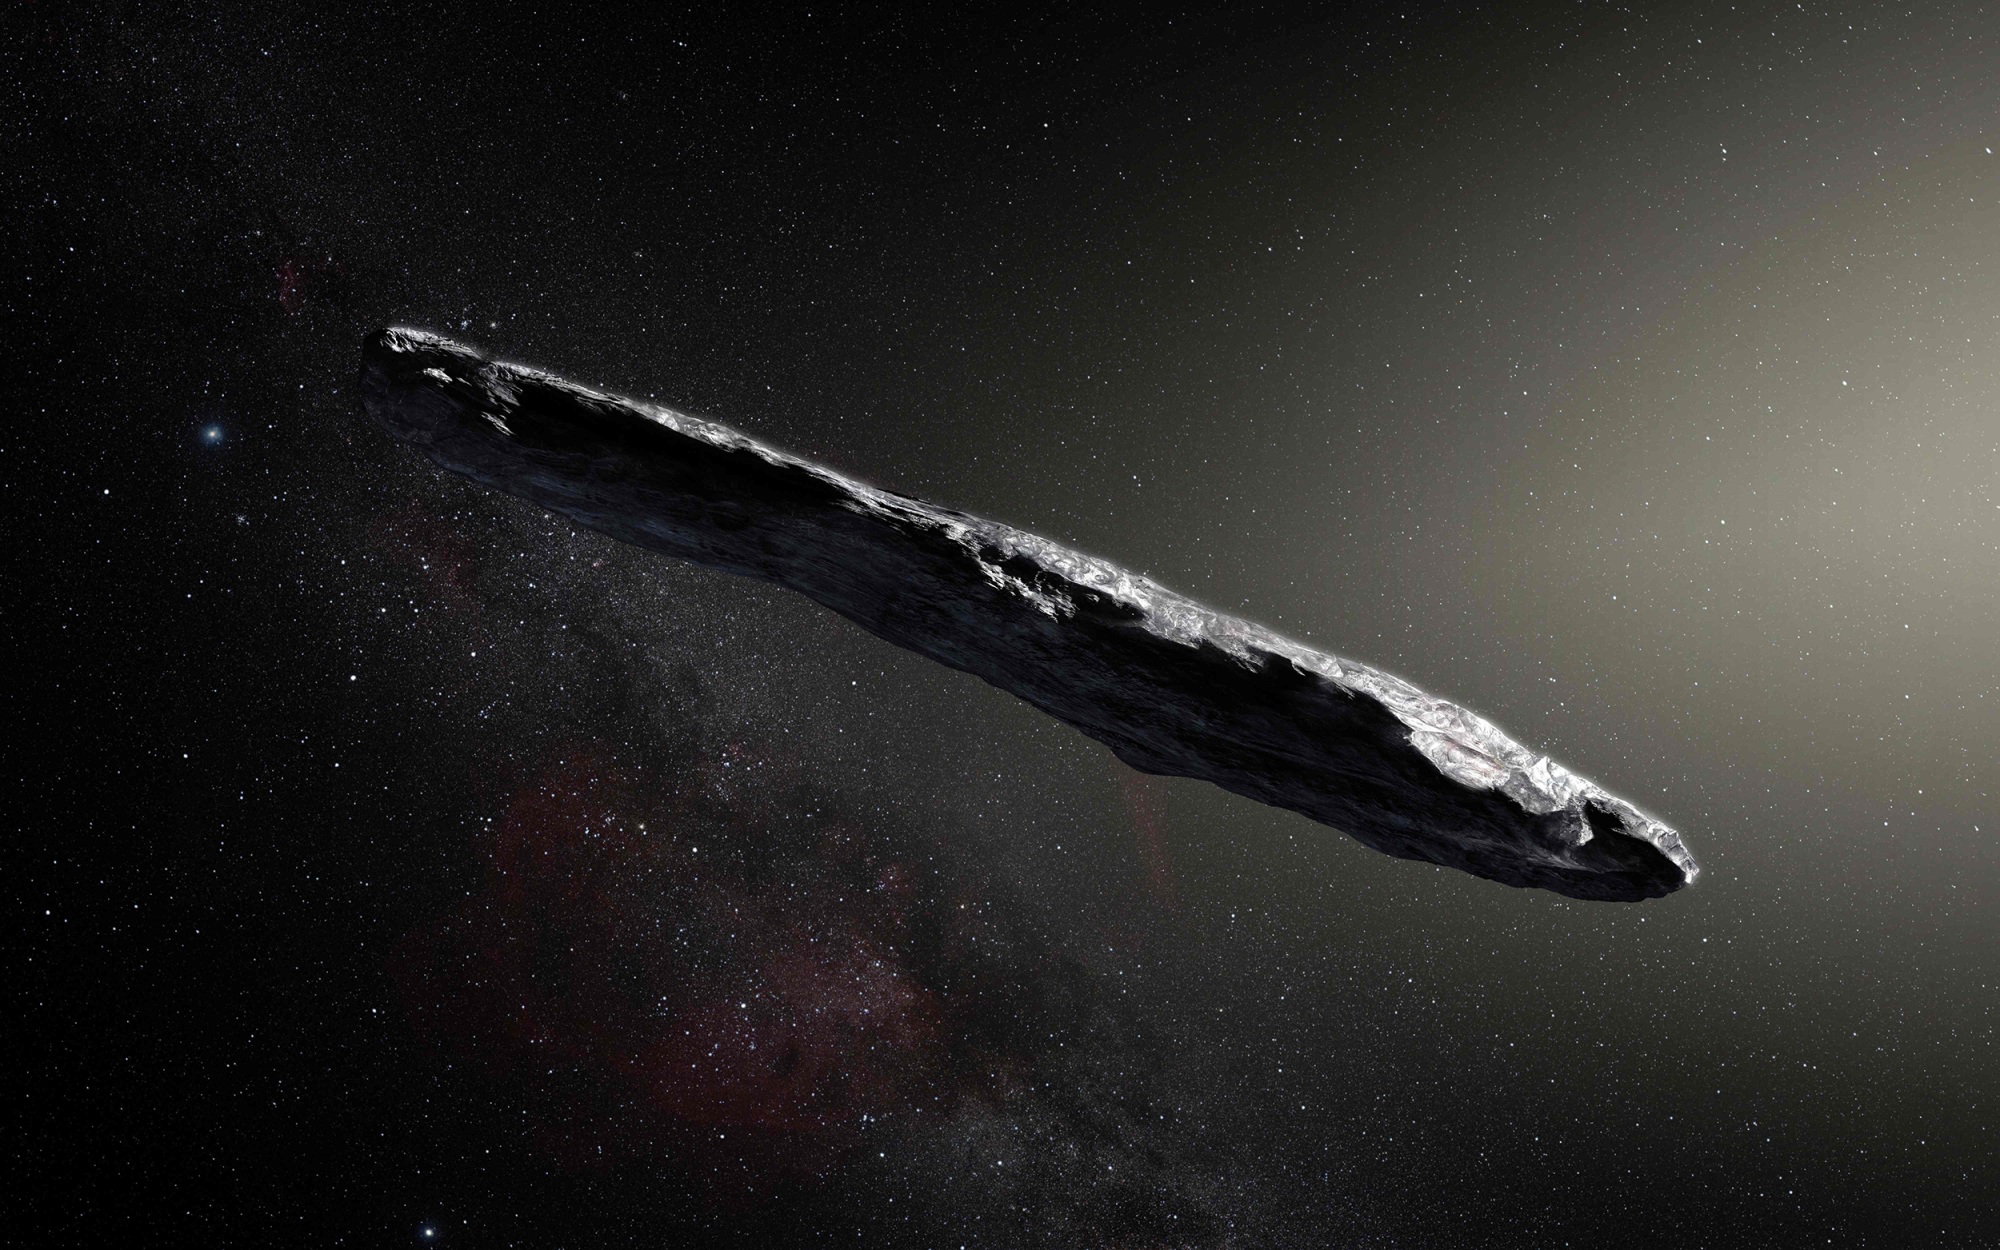 171212-oumuamua-ac-621p_9d41cefd67beebc93c18a75244ead796.fit-2000w.jpg